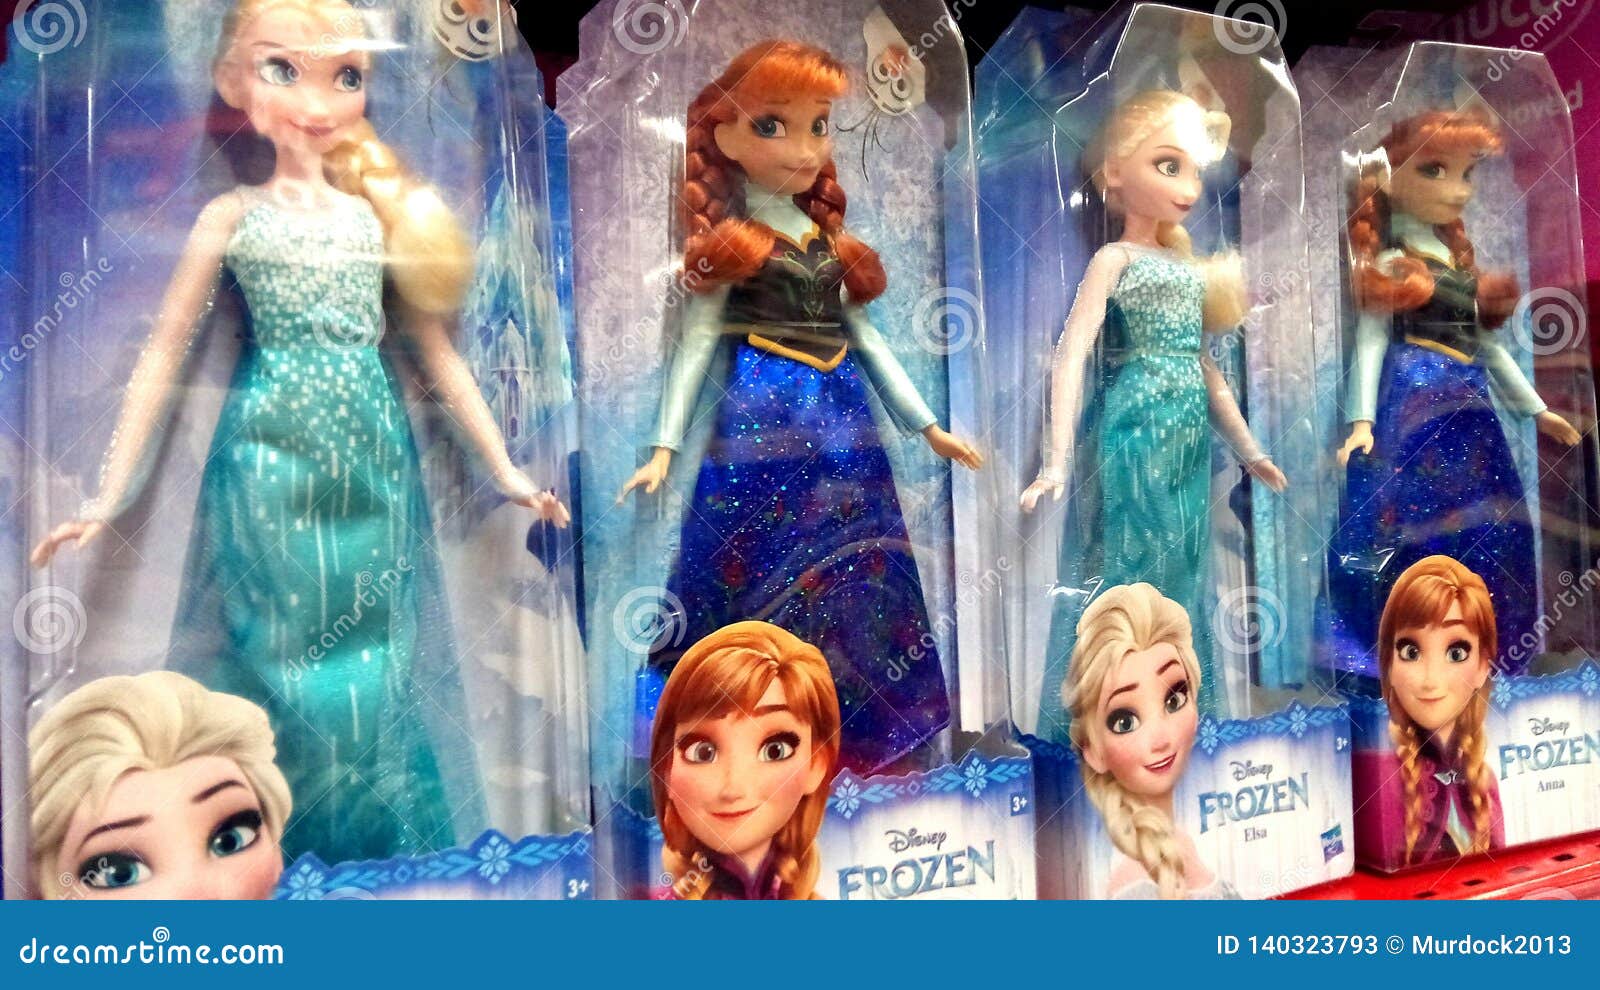 Disney Frozen Elsa and Anna Dolls Editorial Stock Photo - Image of ...